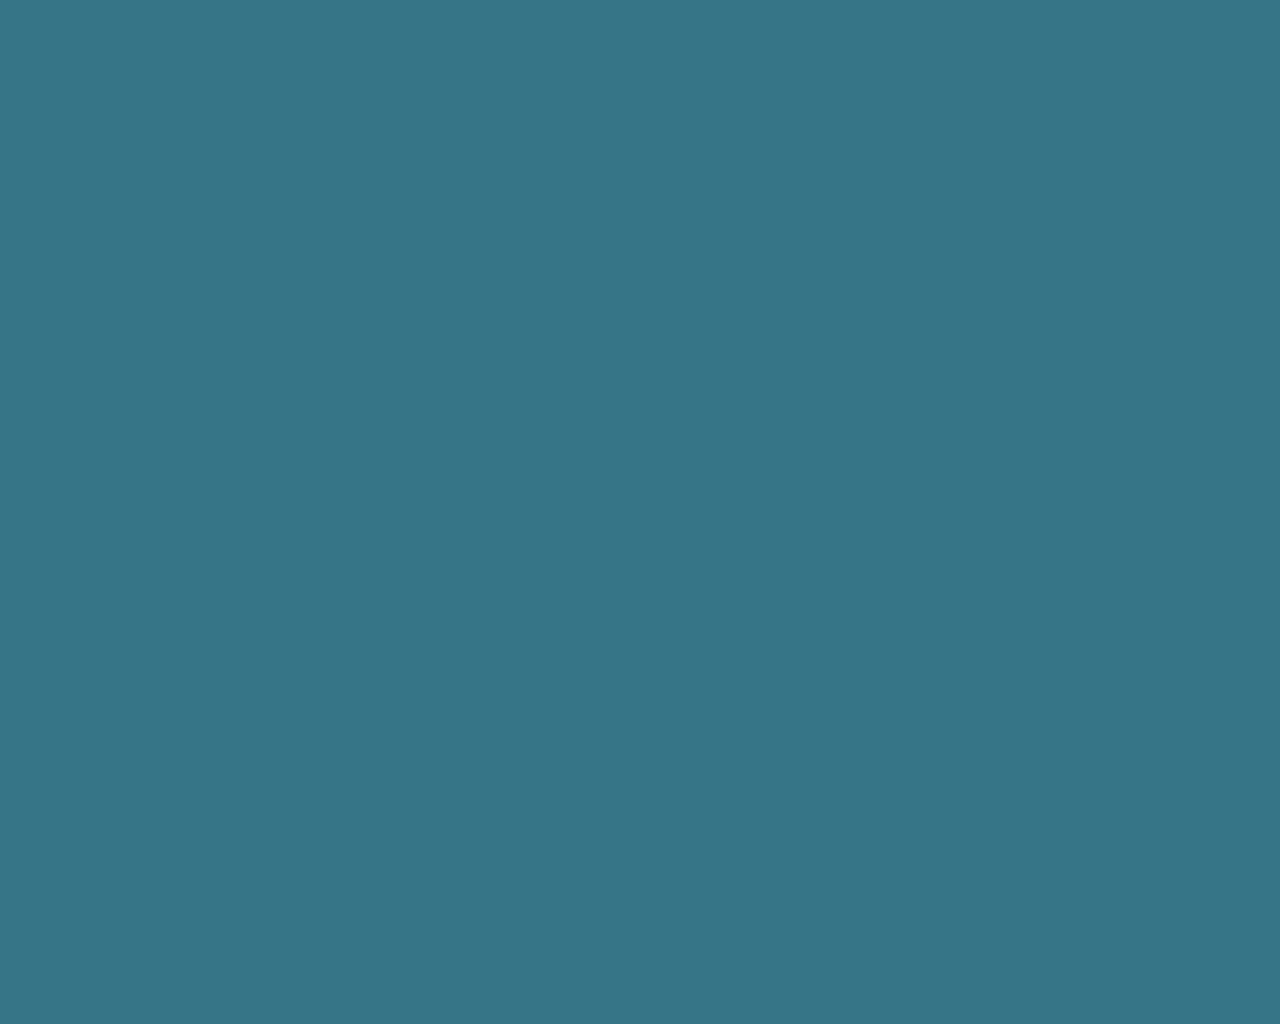 1280x1024 teal blue solid color background